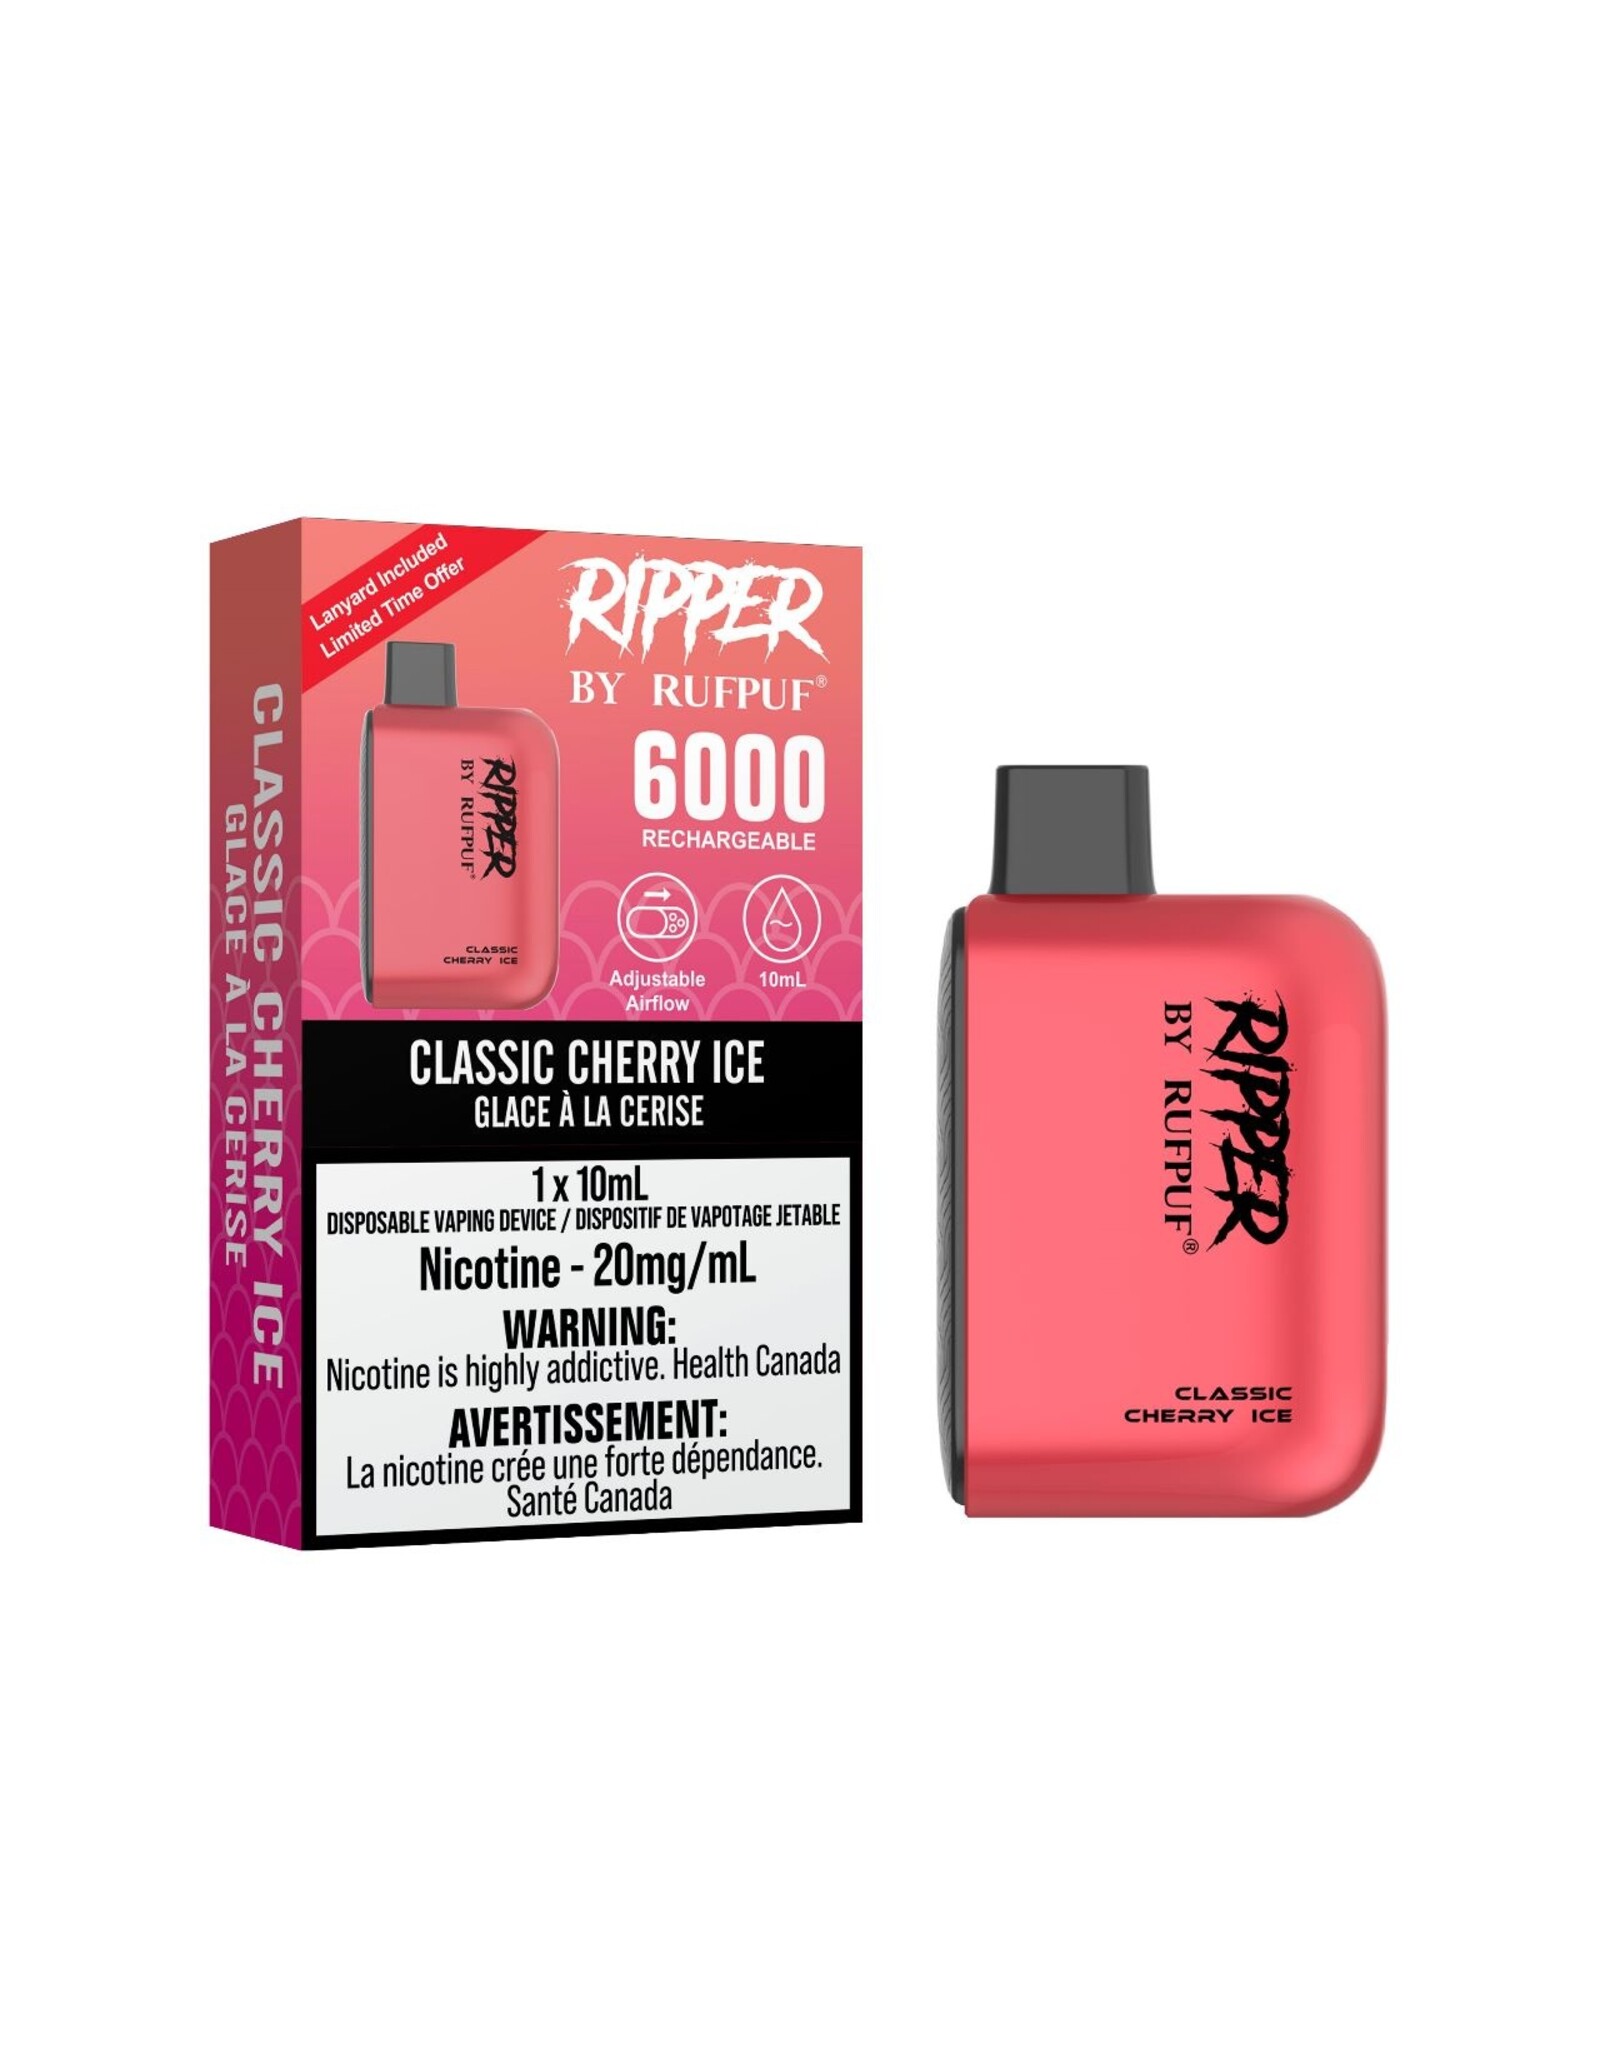 G-Core Rufpuf Ripper 6000